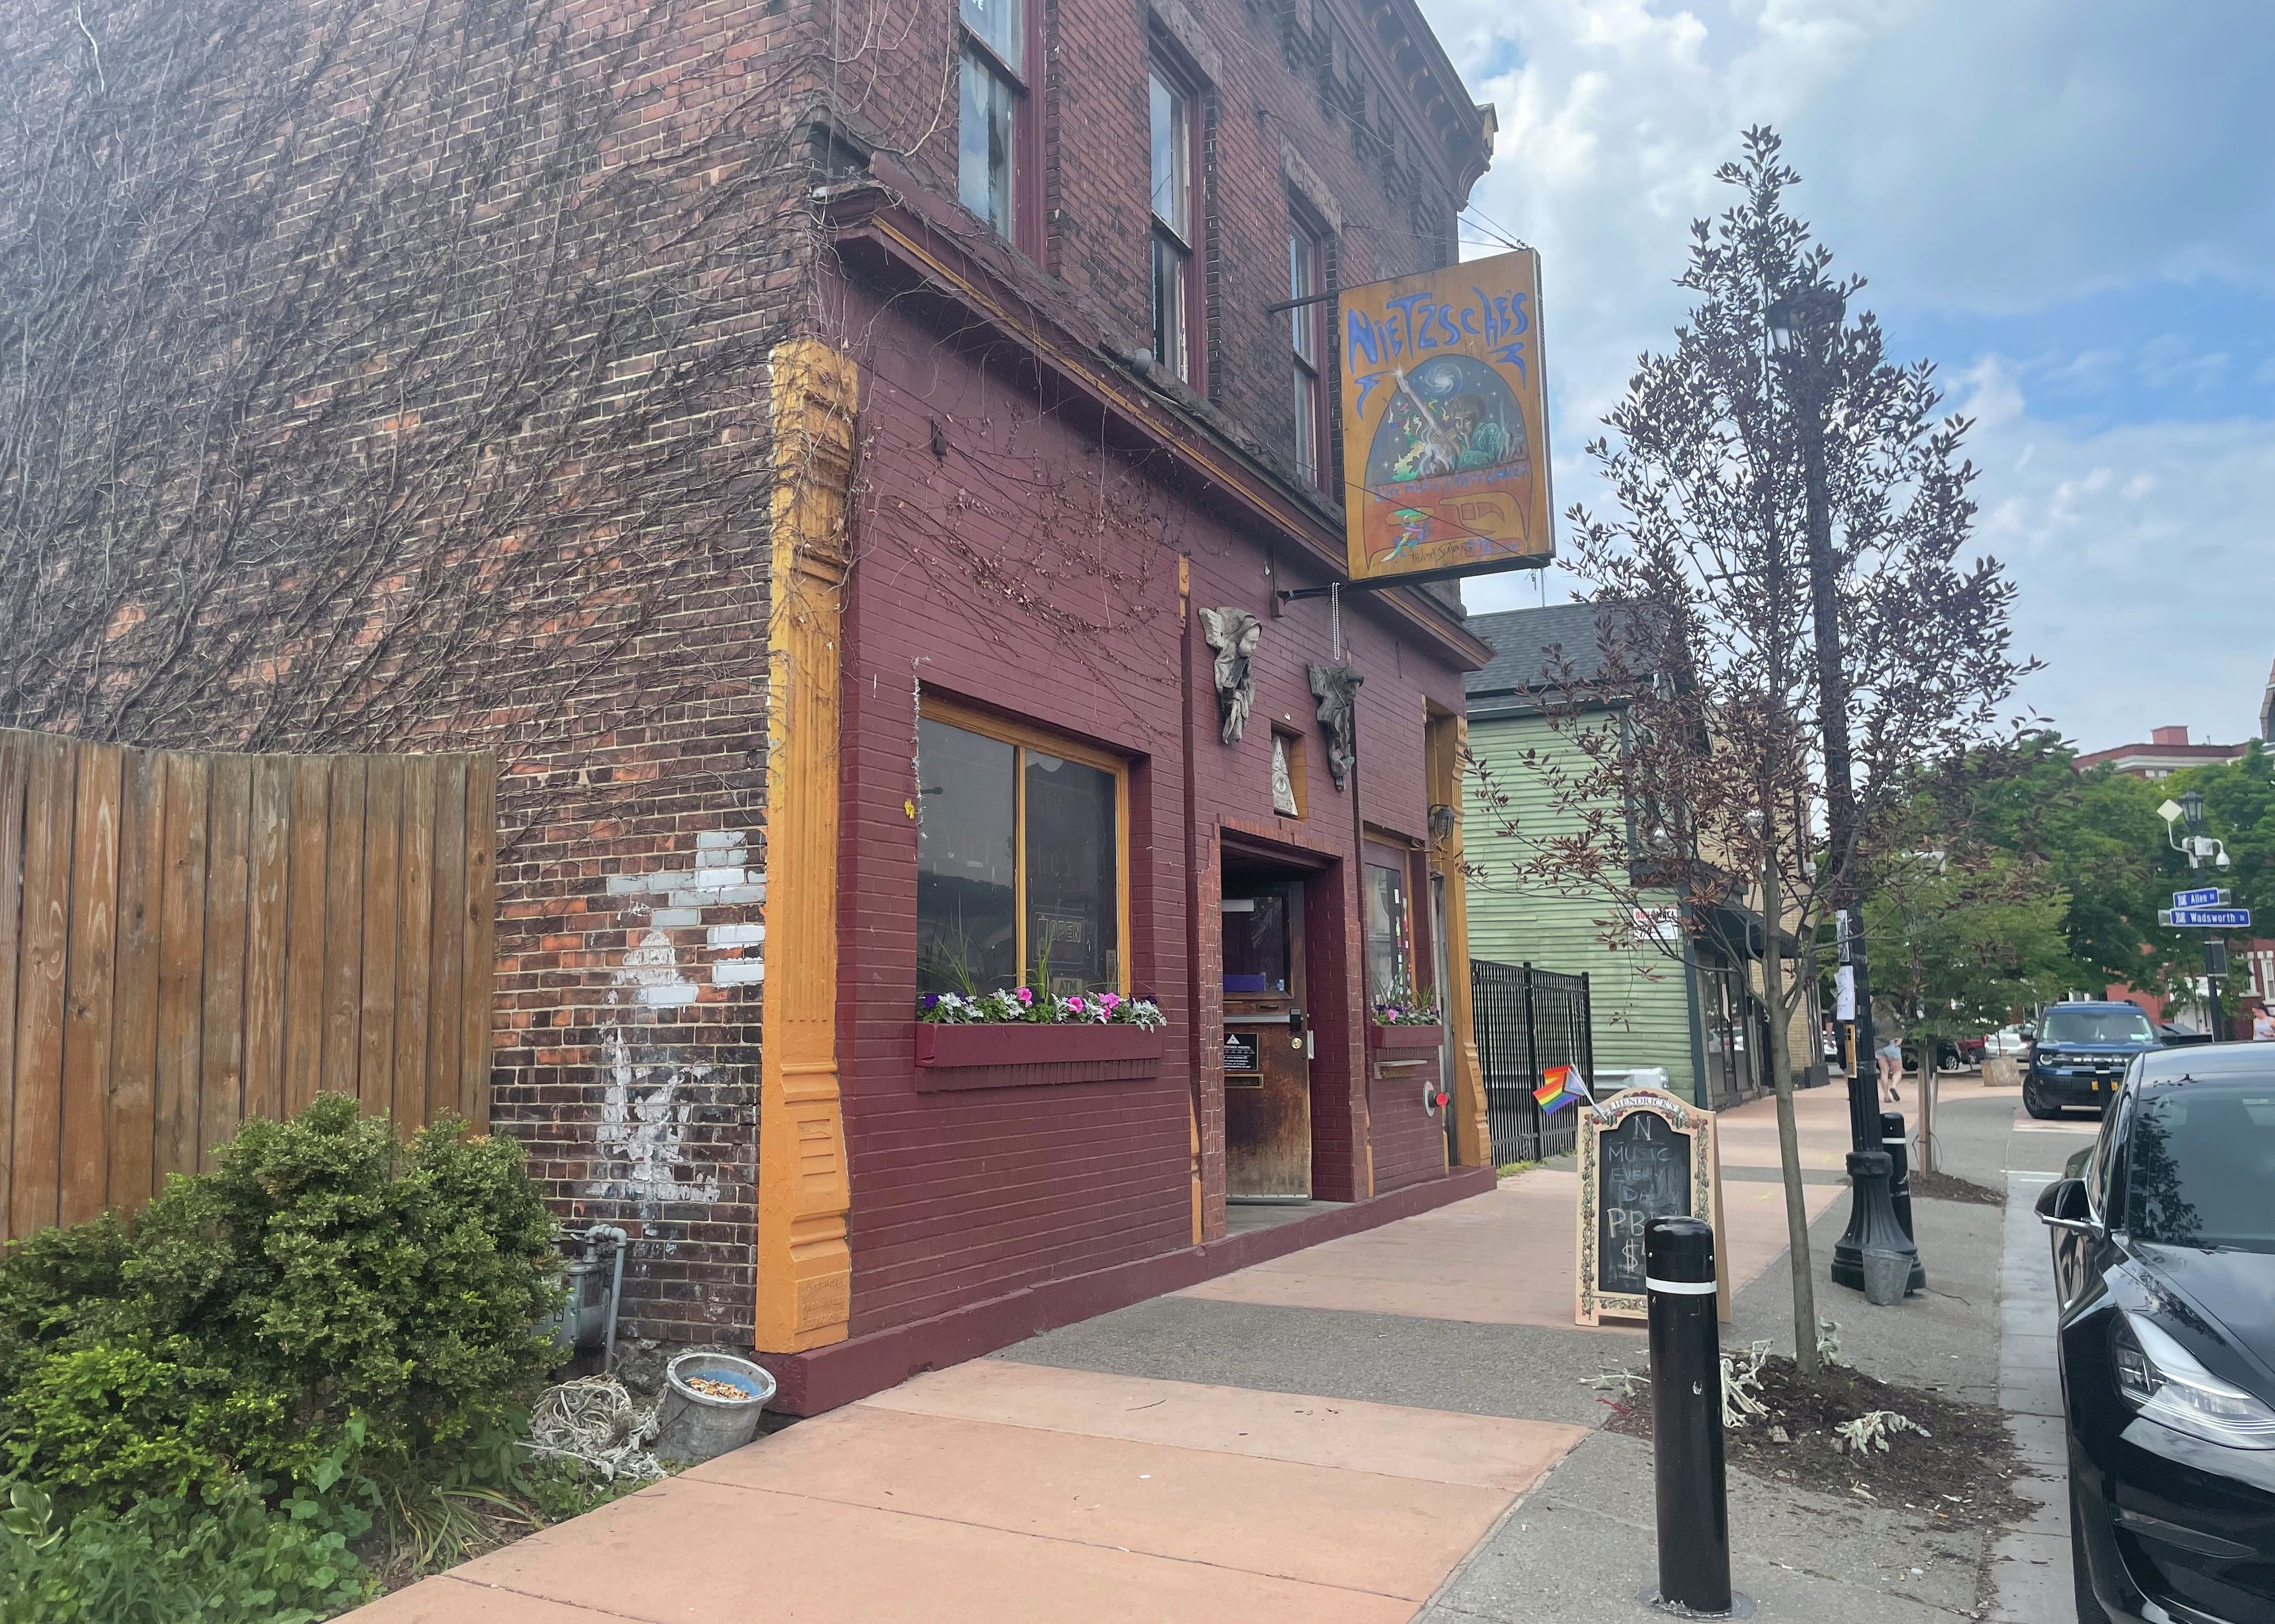 Owner at Nietzsche's bar on Allen Street, Dana Scott on opening early in honor of The Old Pink in Buffalo's Allentown neighborhood